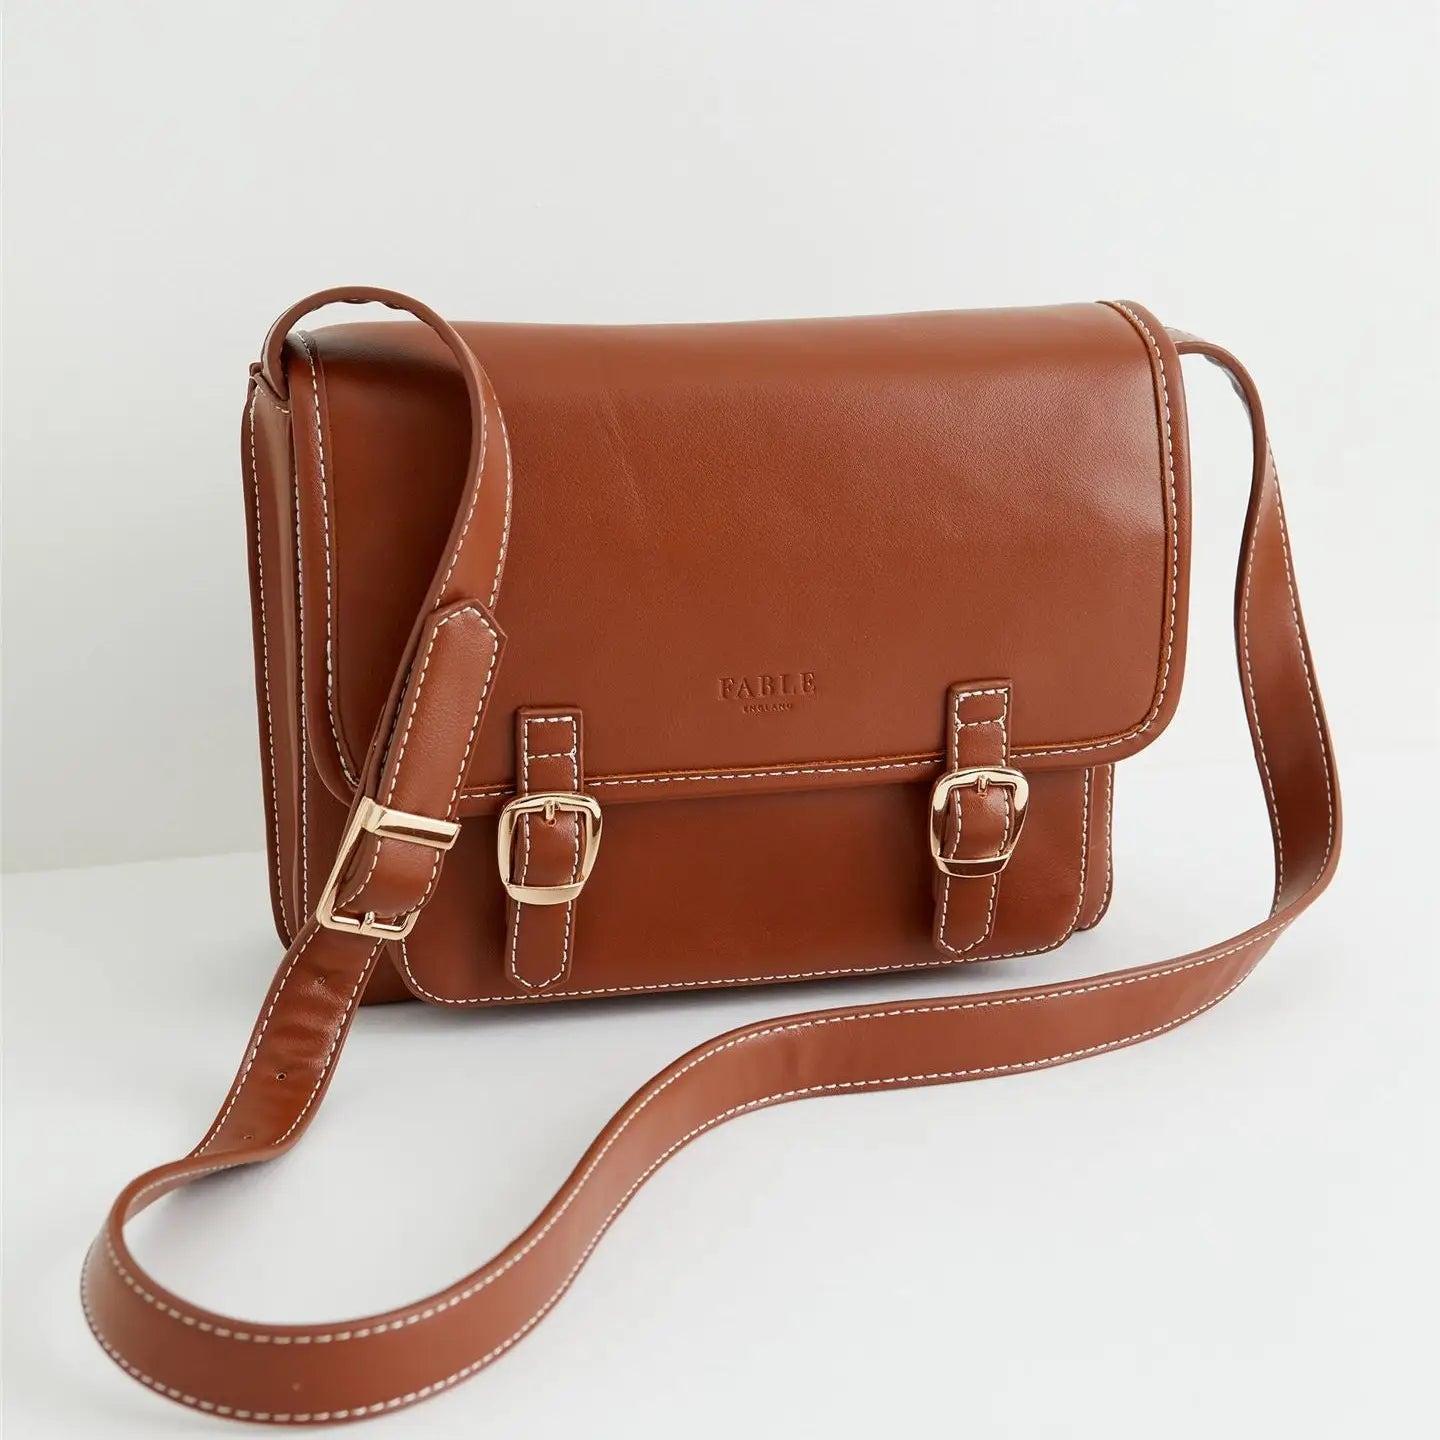 Brown Satchel Bag